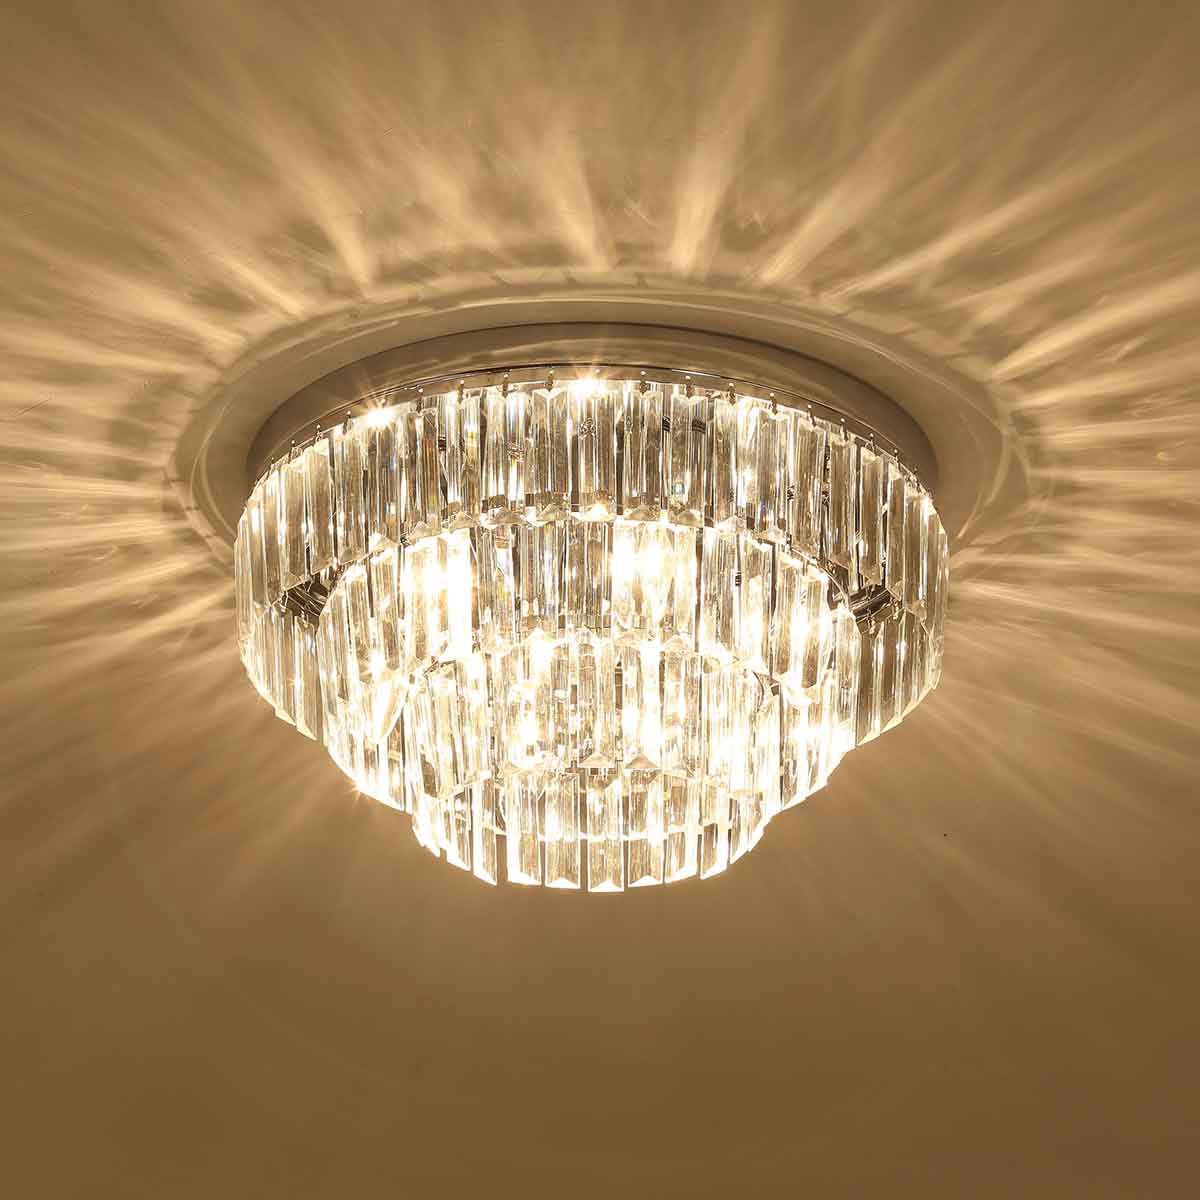 Shining Bright: The Elegance of Chandelier Bathroom Ceiling Lights